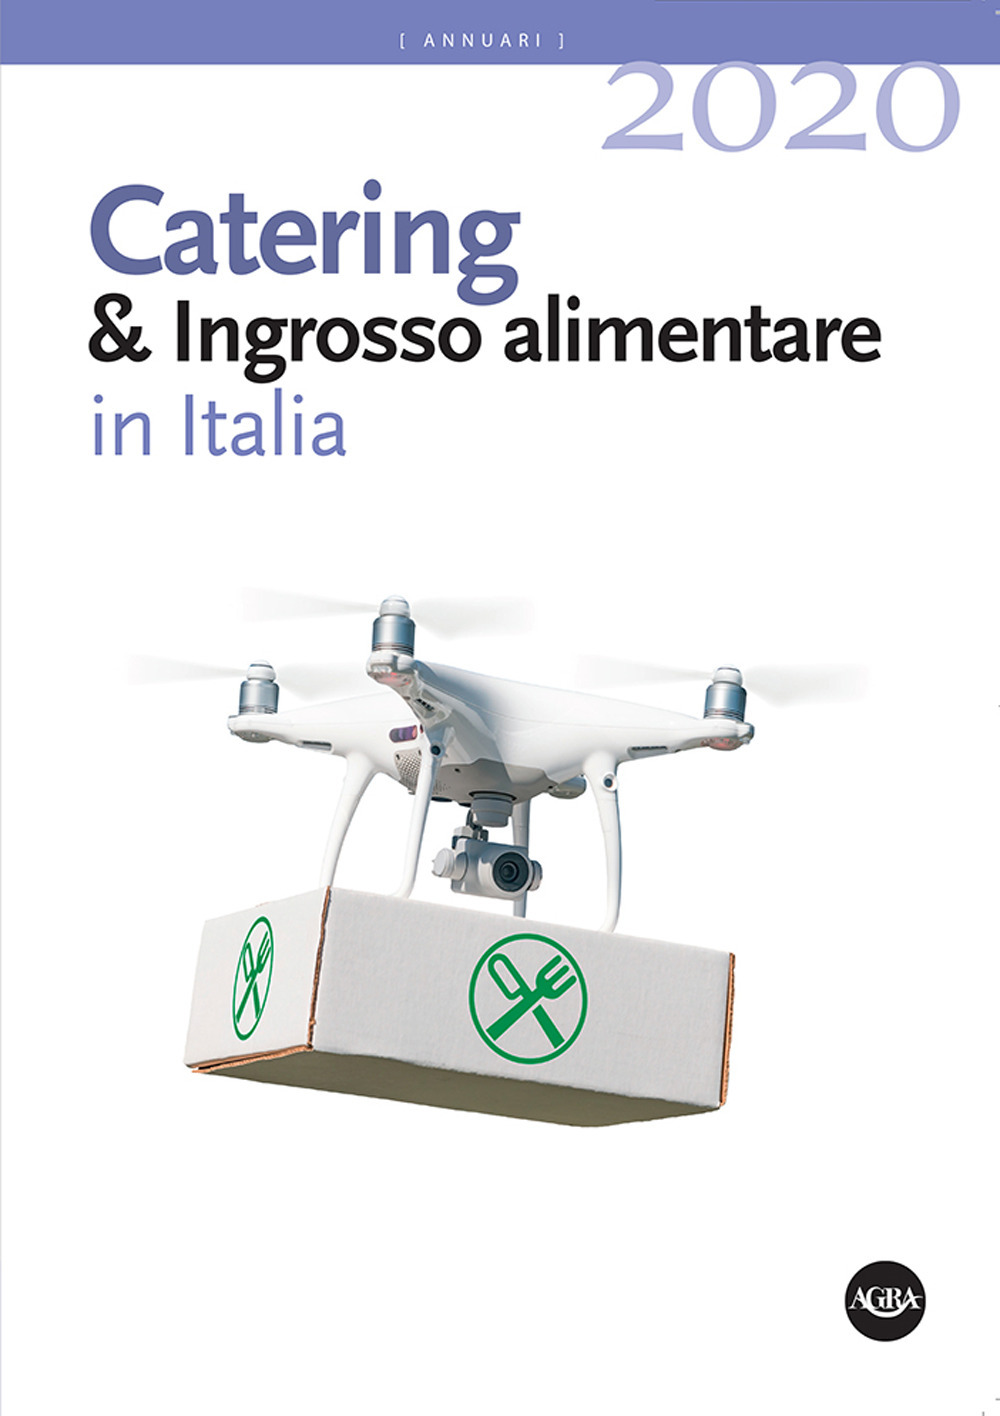 Annuario catering & ingrosso alimentare in Italia